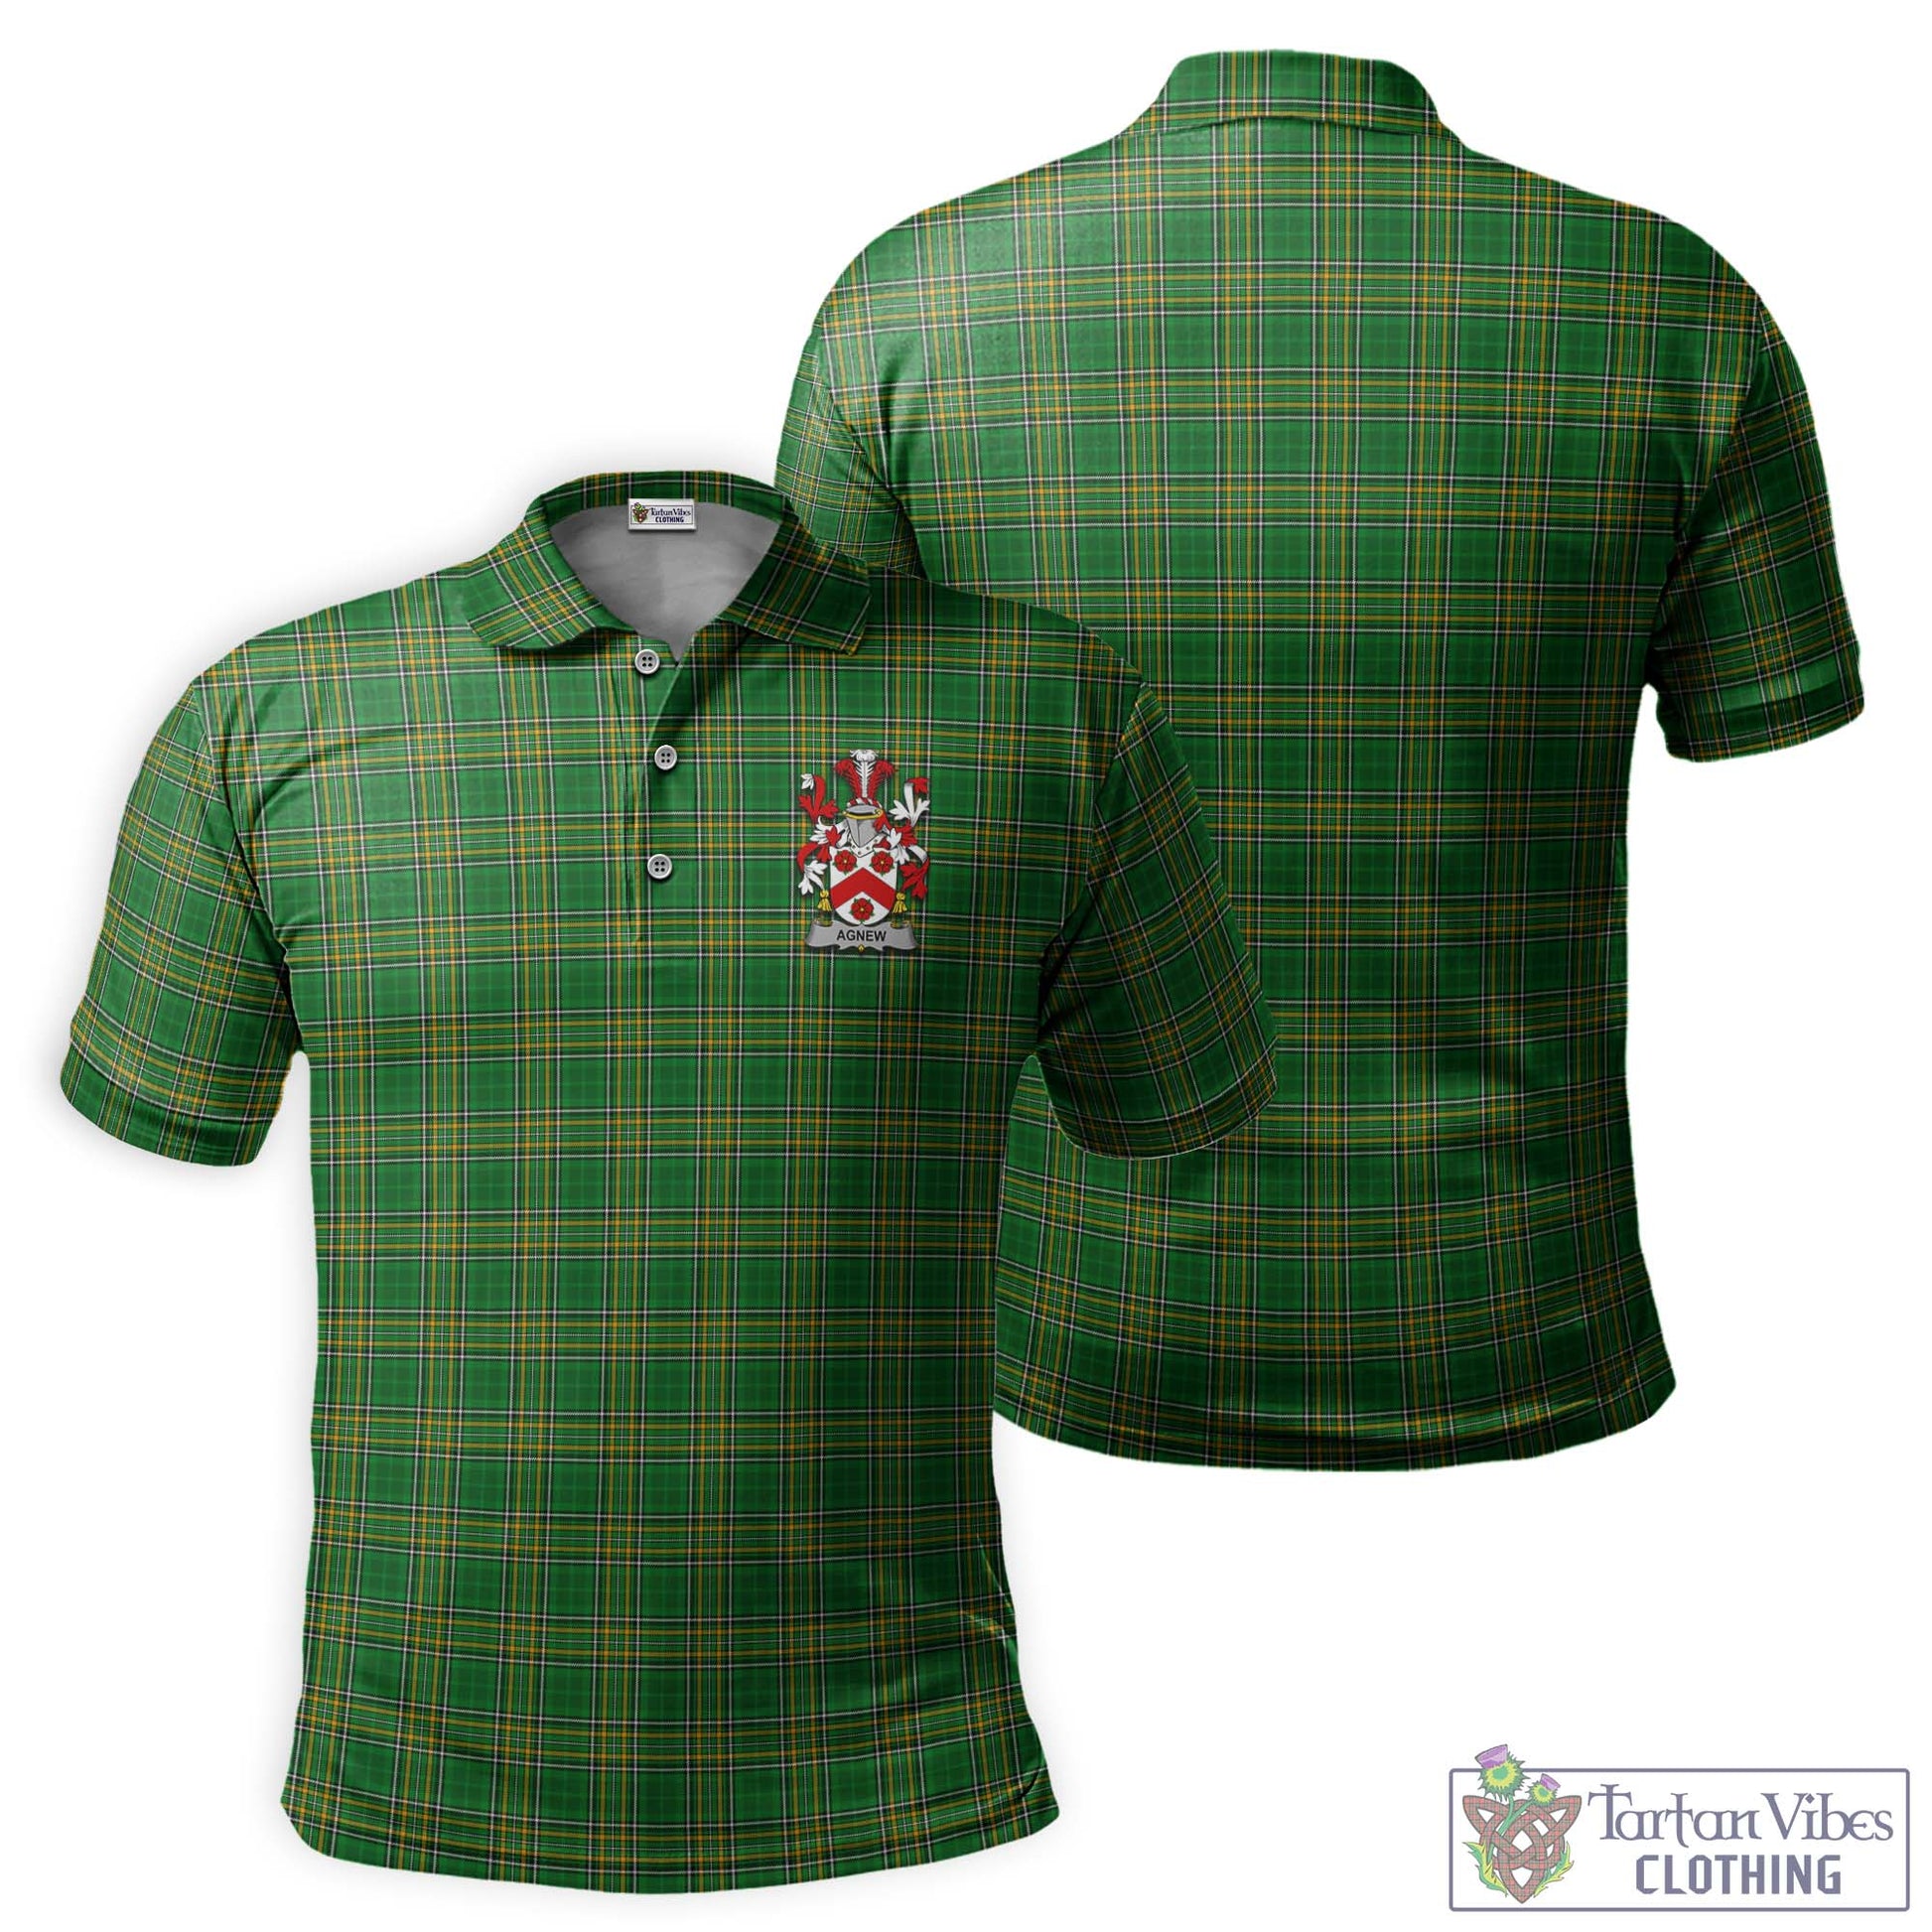 Tartan Vibes Clothing Agnew Ireland Clan Tartan Polo Shirt with Coat of Arms